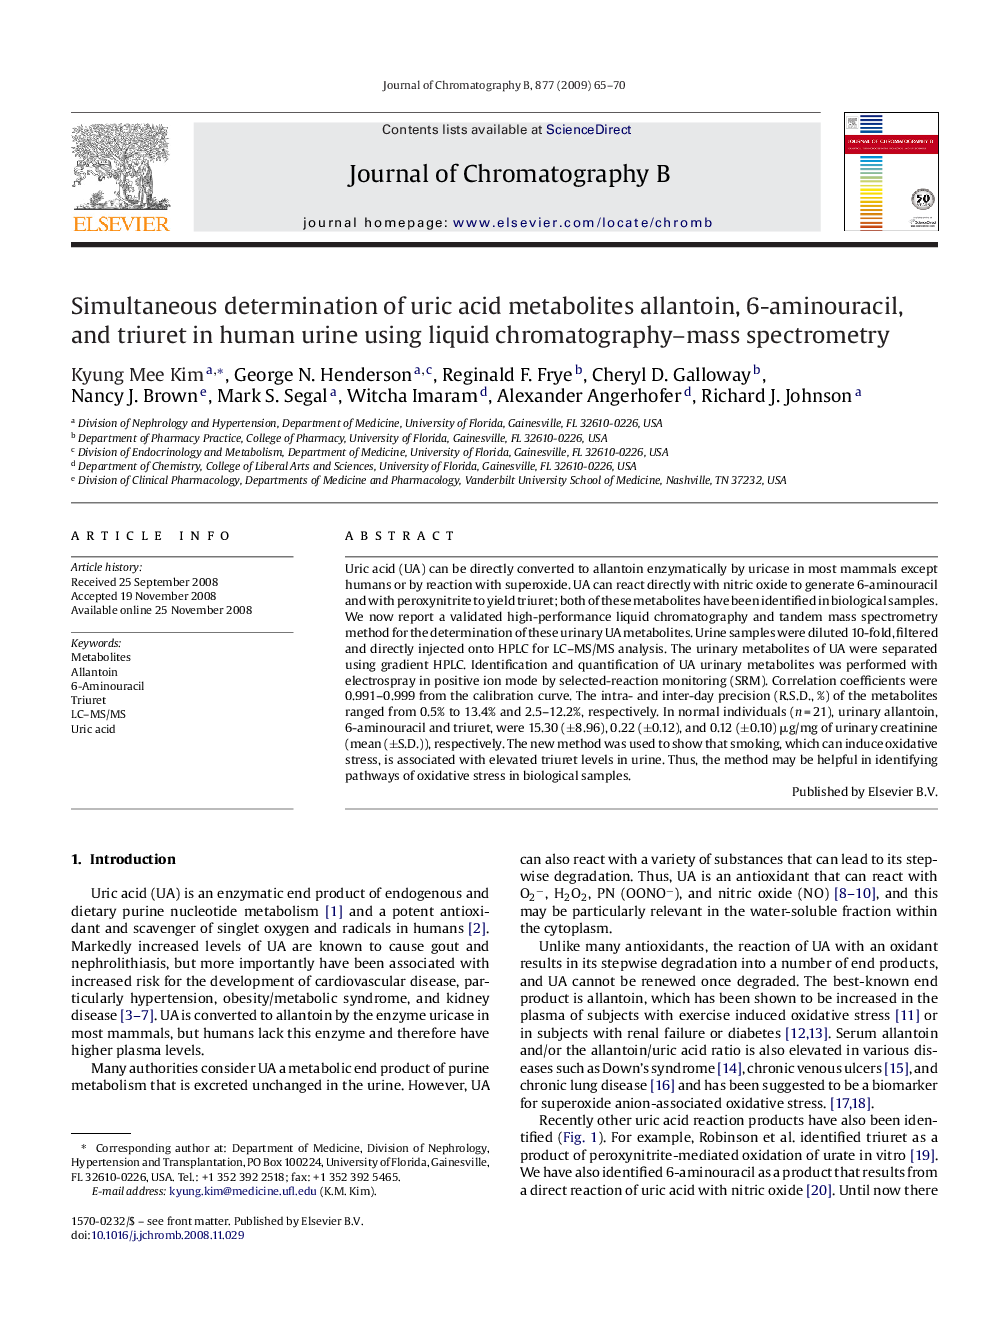 Simultaneous determination of uric acid metabolites allantoin, 6-aminouracil, and triuret in human urine using liquid chromatography–mass spectrometry